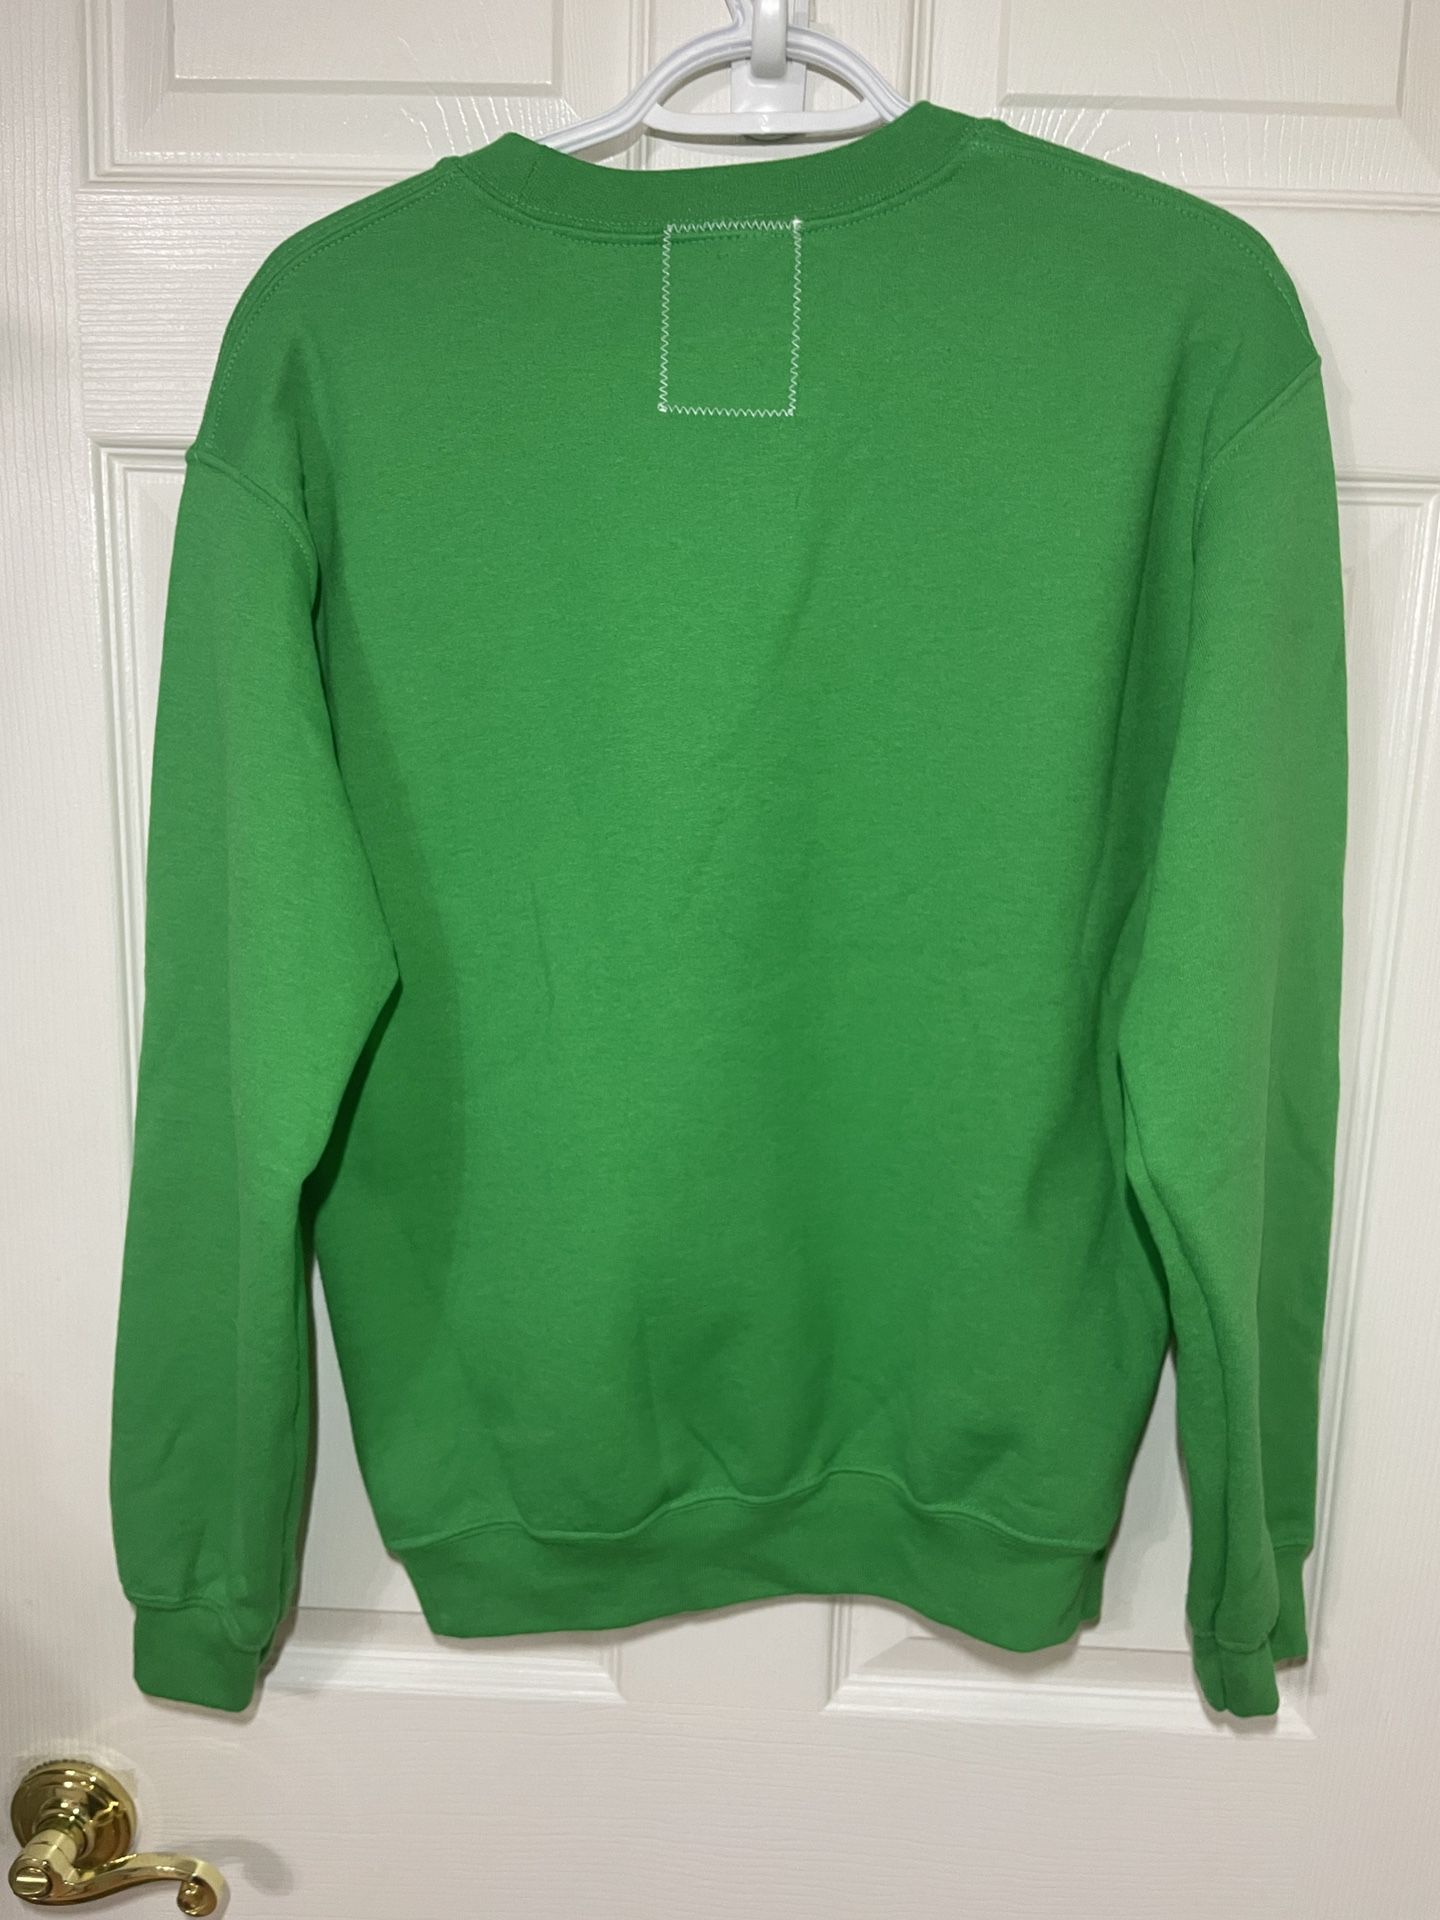 Riot Society Crewneck “Reindeer Games Ugly Xmas Sweater’ Crewneck Sweatshirt (Size: Small)  Green